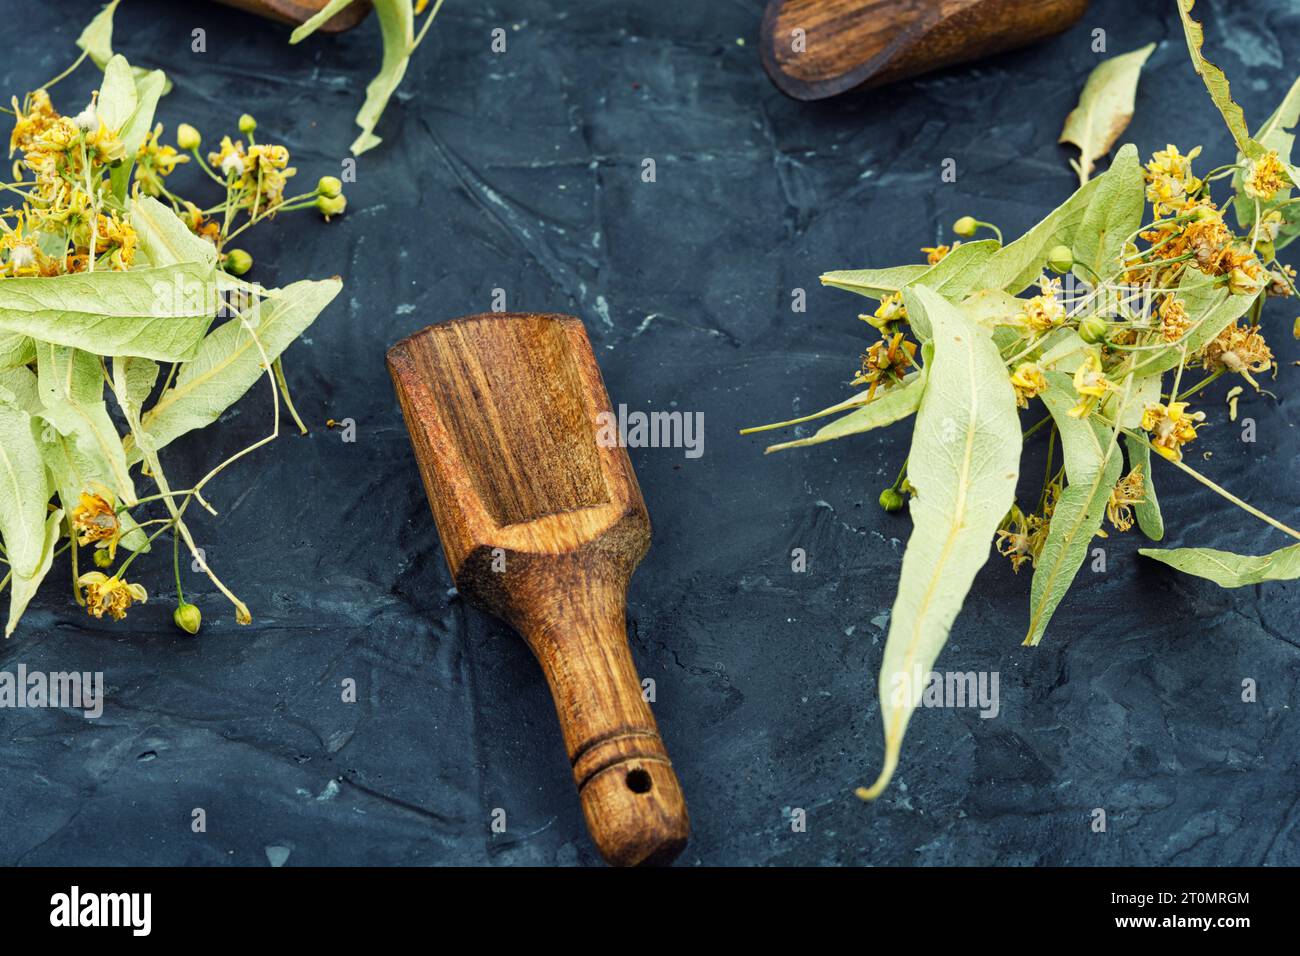 Healing inflorescences of linden for preparing tea, herbal medicine, medicinal plants. Stock Photo